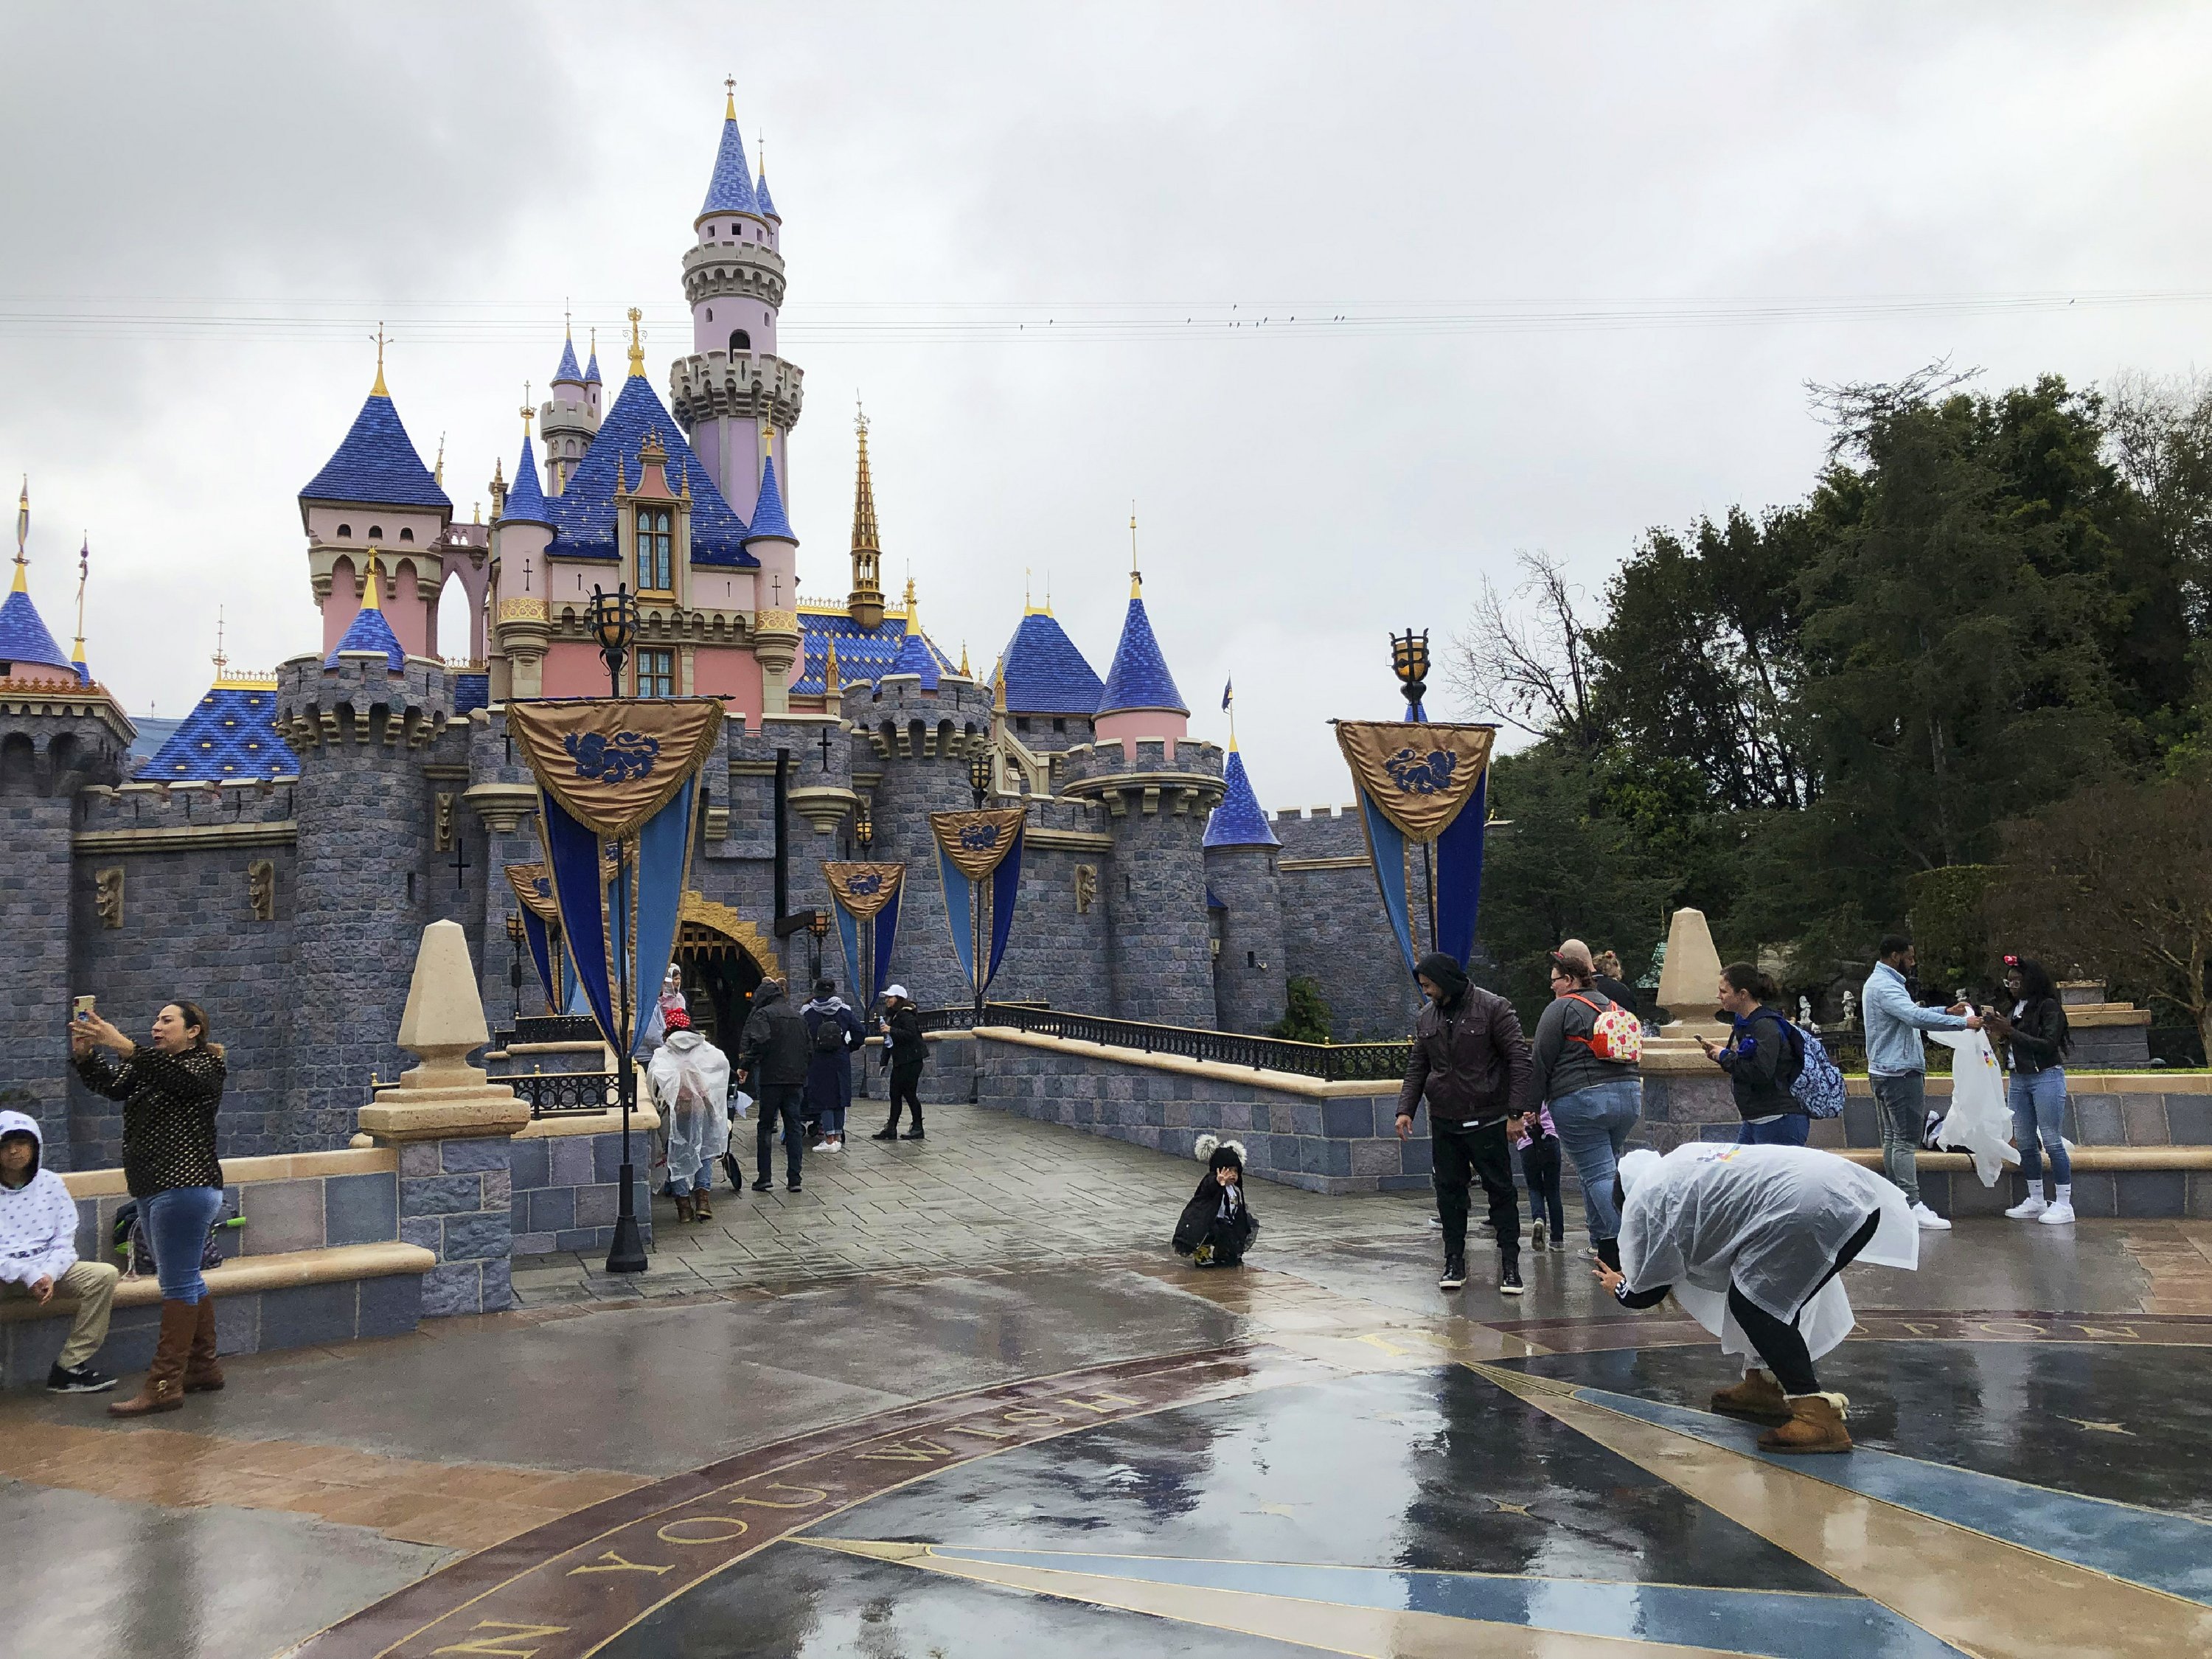 Disney updates Jungle Cruise after insensitivity criticism